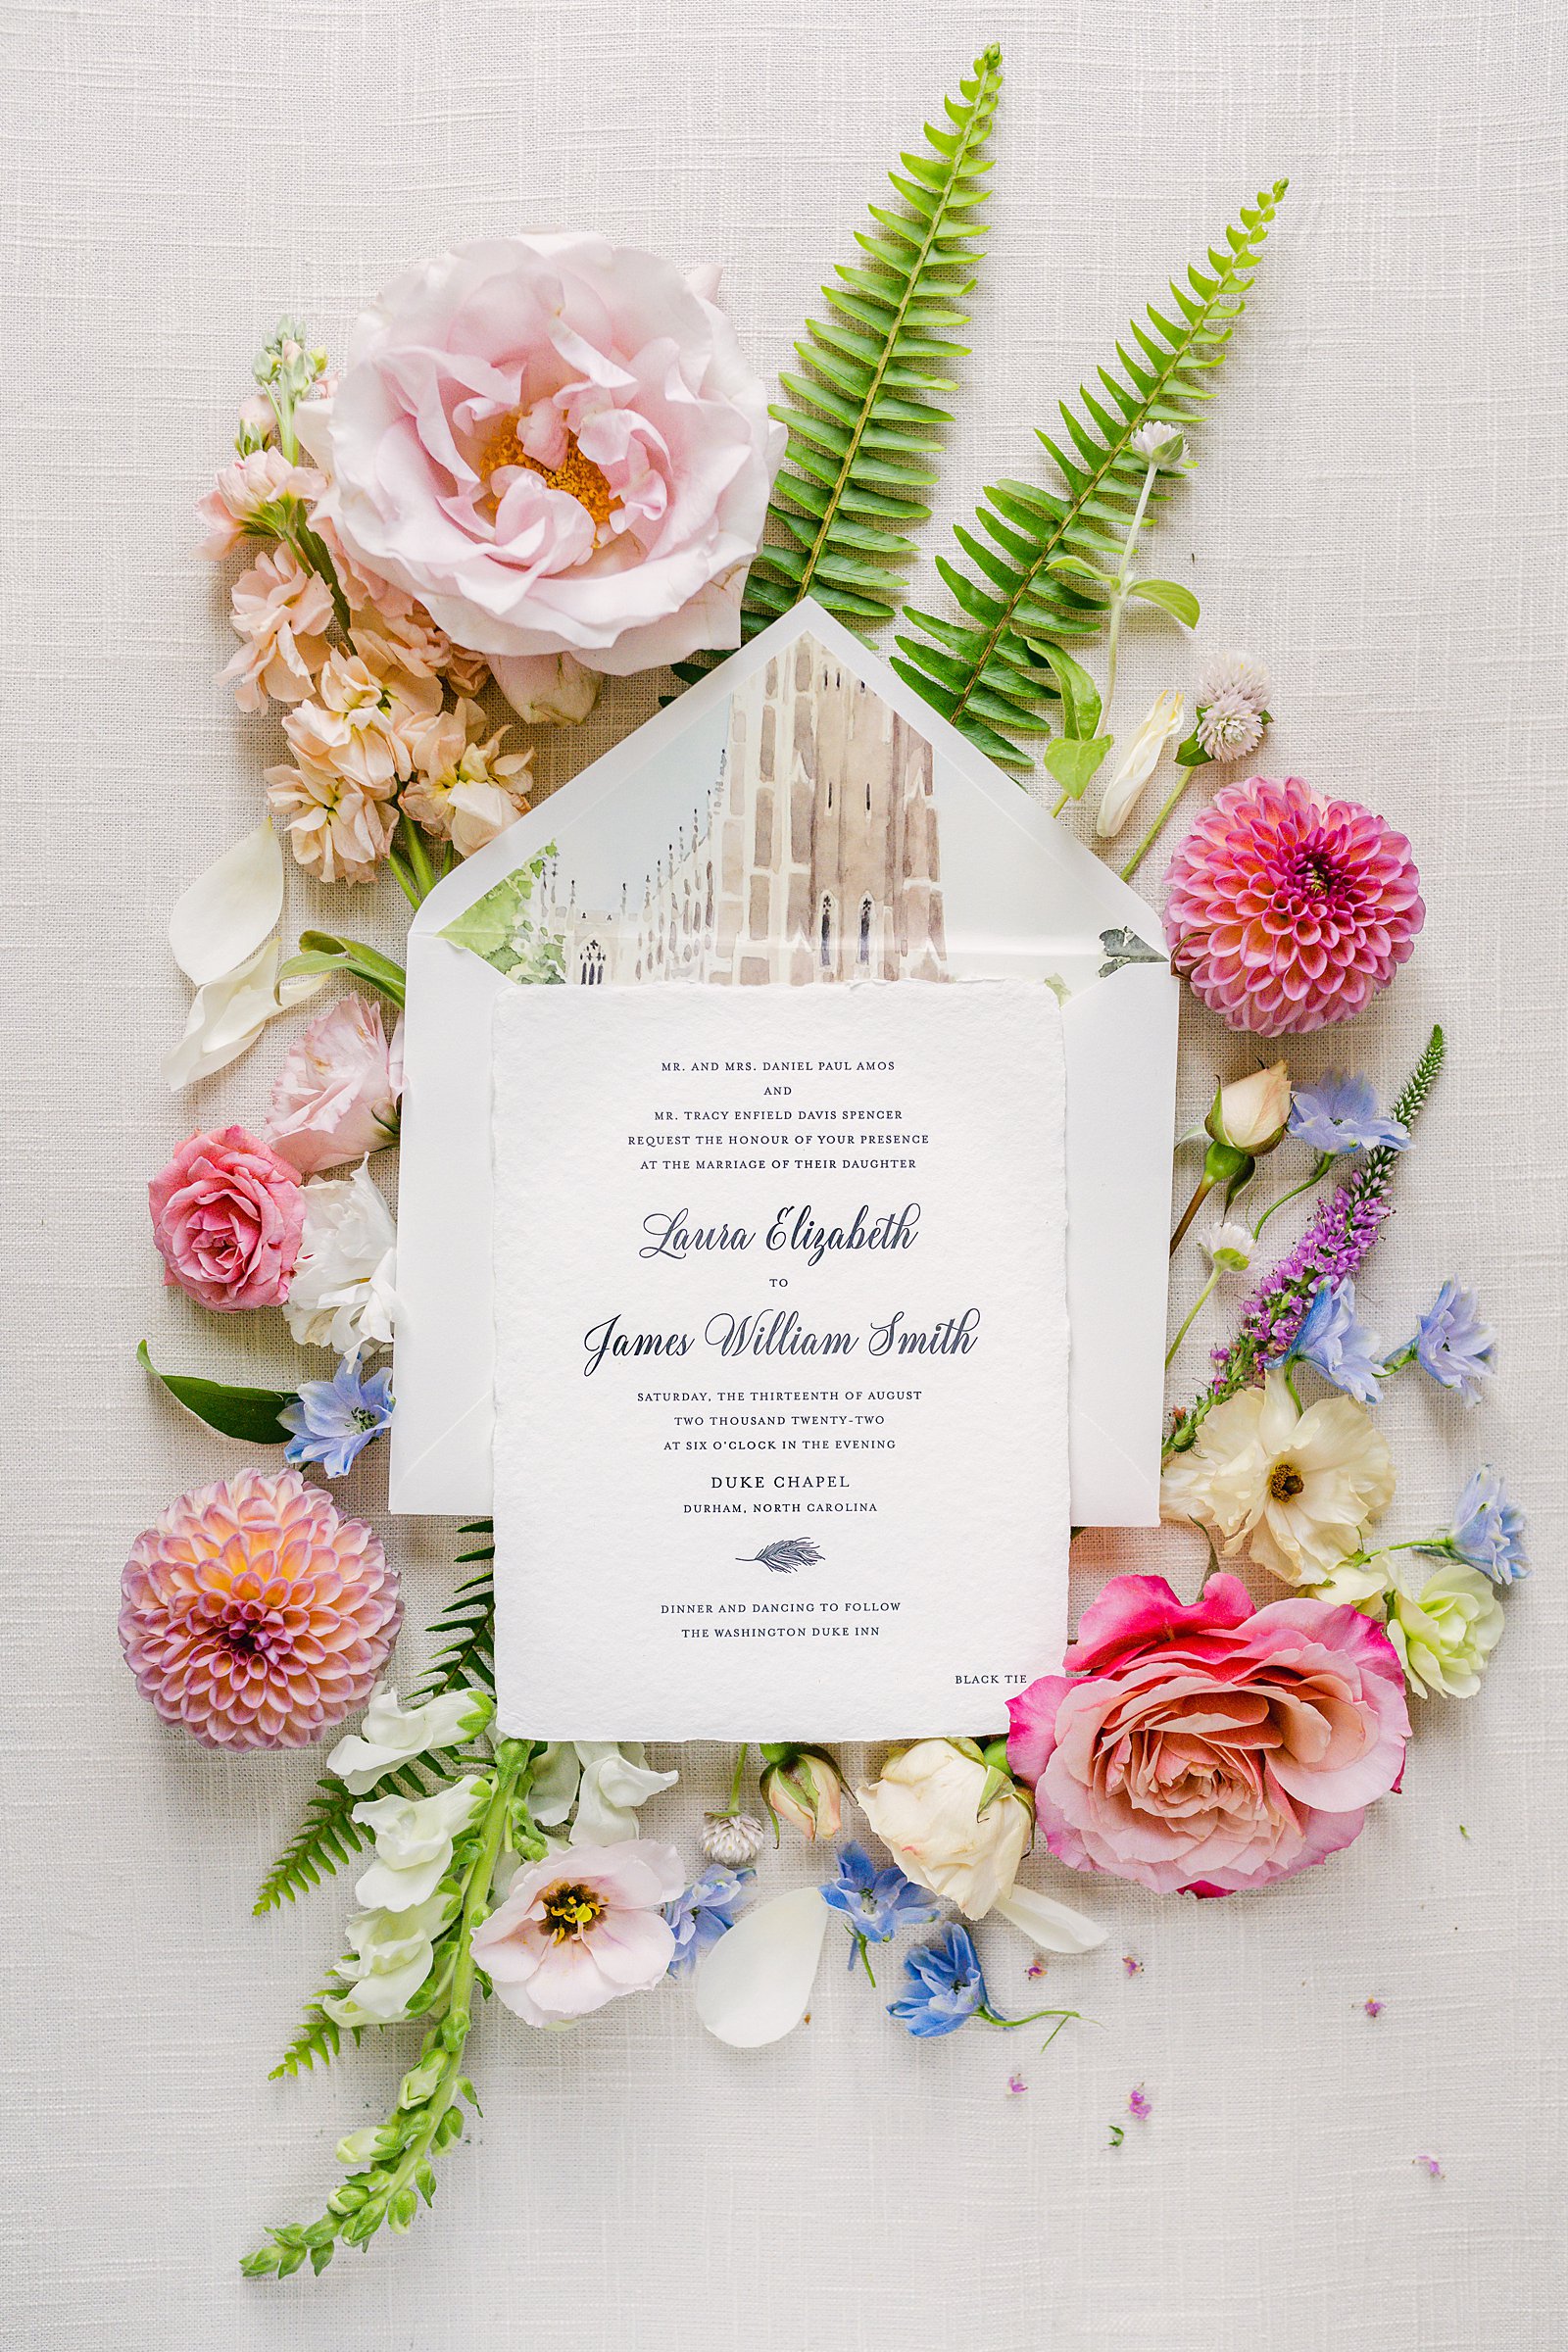 Laura + William's Duke Chapel and Washington Duke Inn Wedding - luxury wedding invitation suite